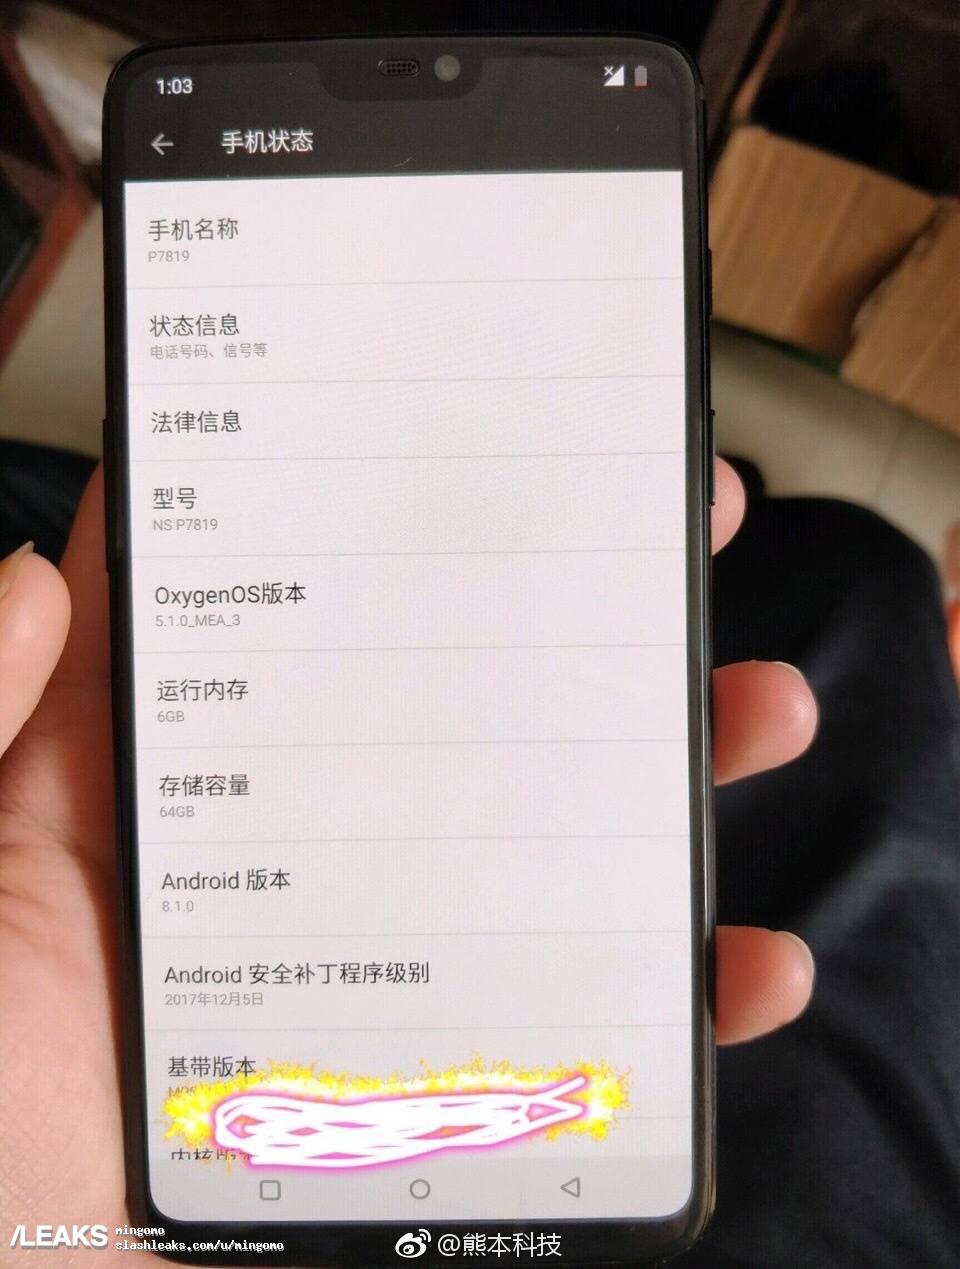 OnePlus 6-Bilder kopierten iPhone X